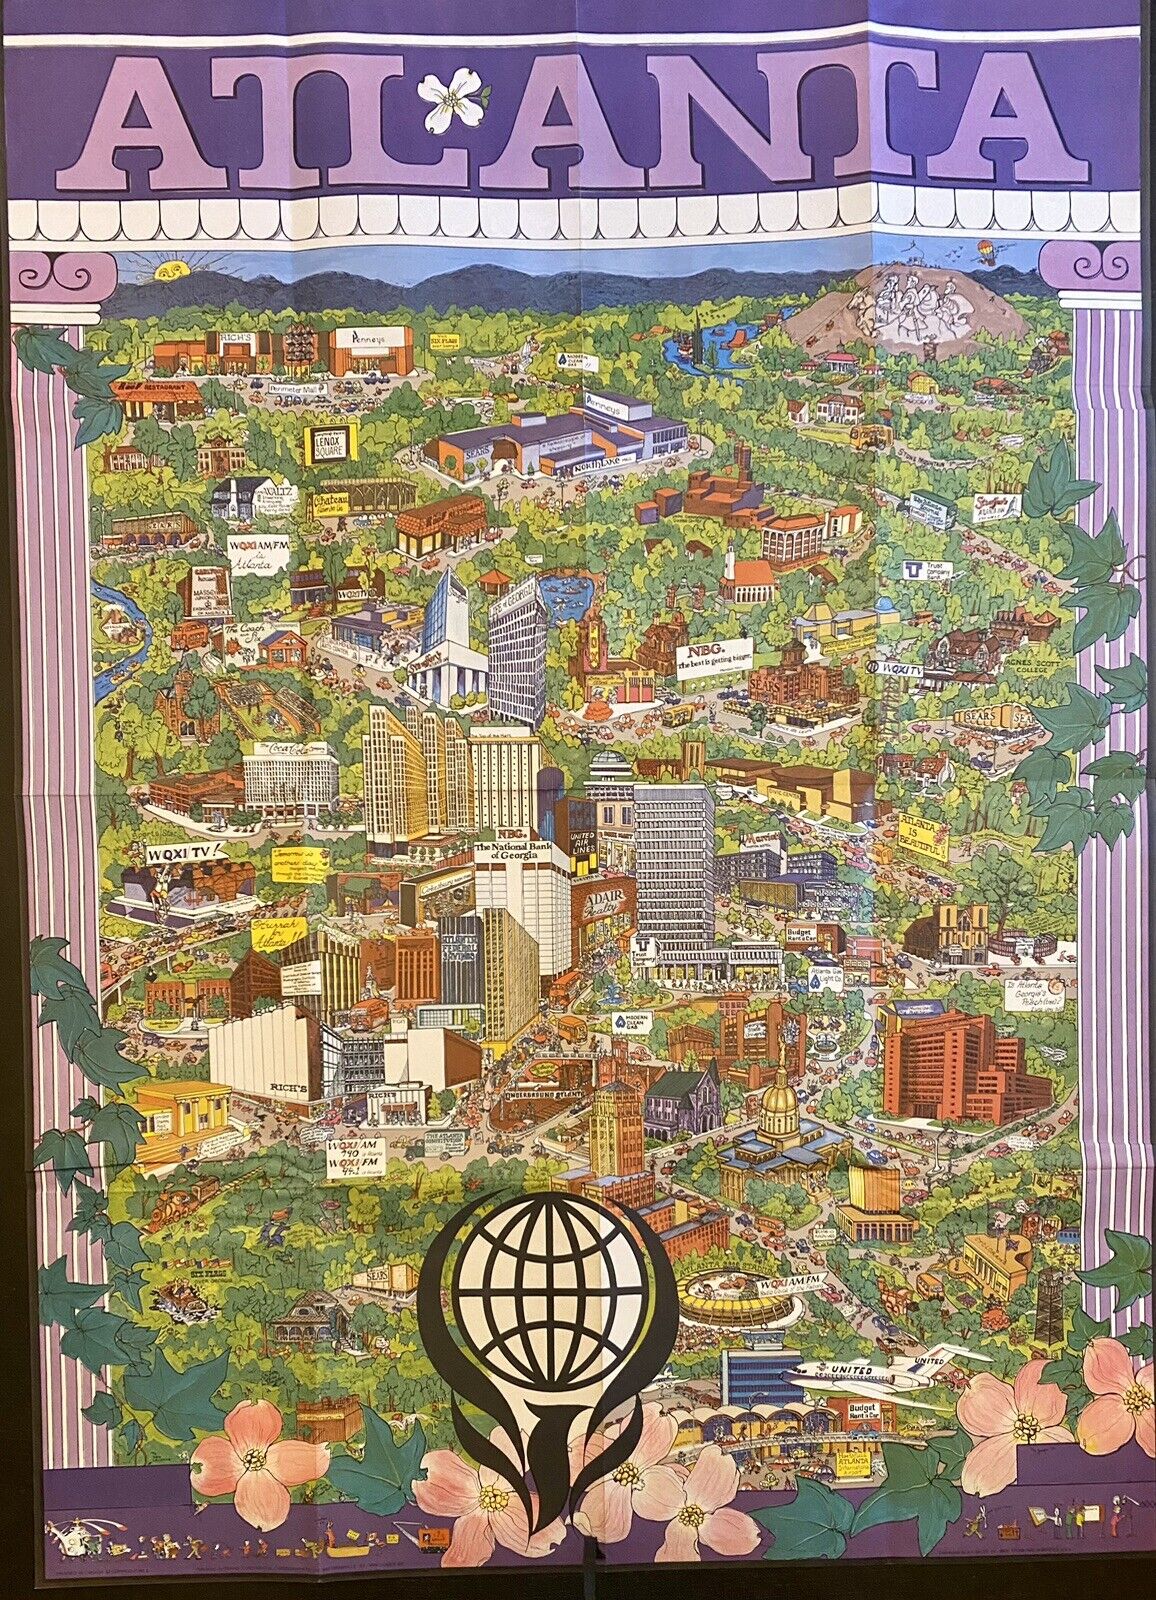 1972 Trans Continental Cartographers Pictorial Map of Atlanta, Georgia